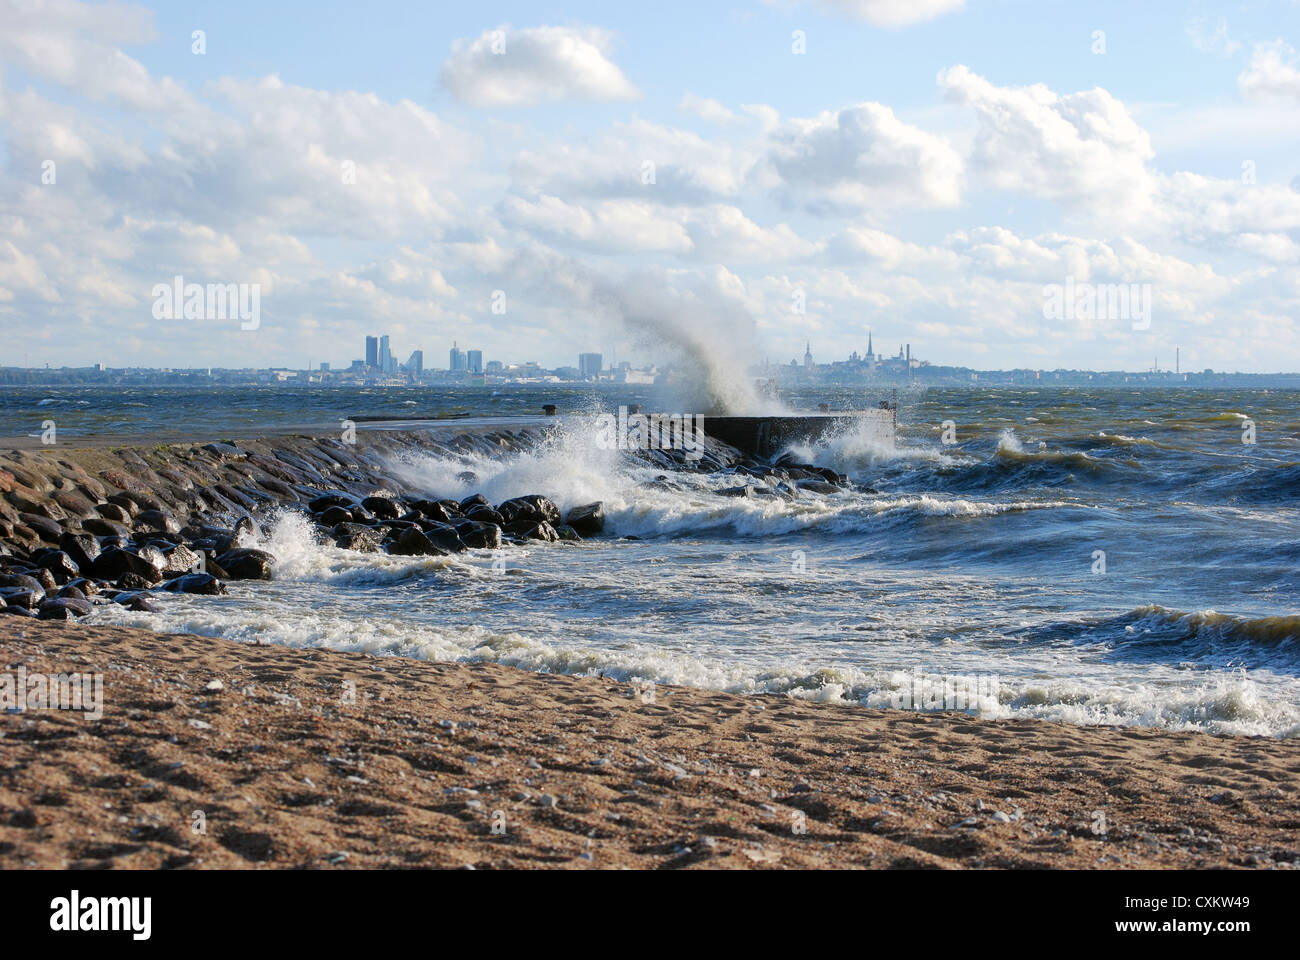 Storm on sea. Estonian capital Tallinn at background Stock Photo